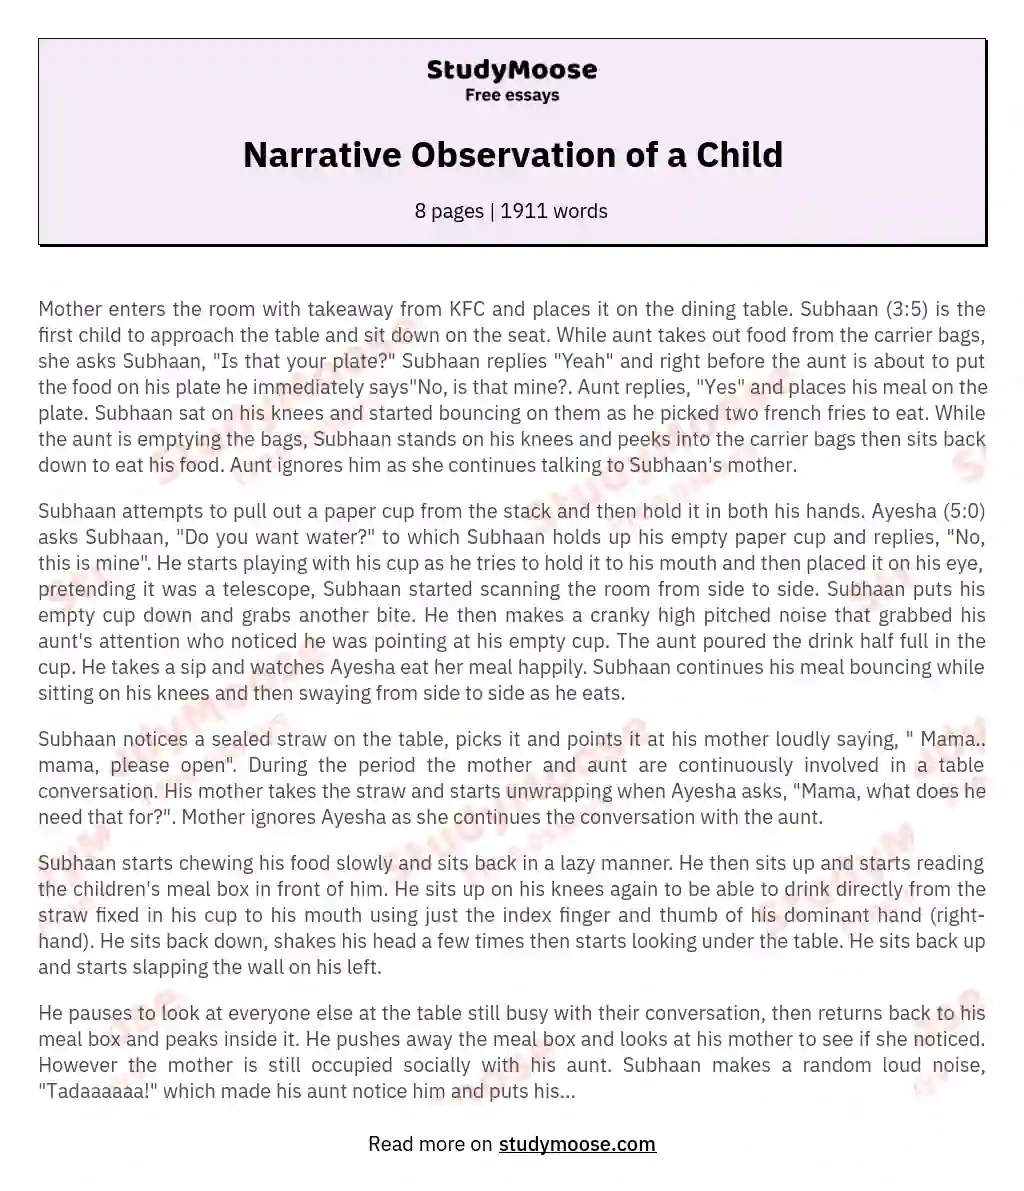 Narrative Observation of a Child